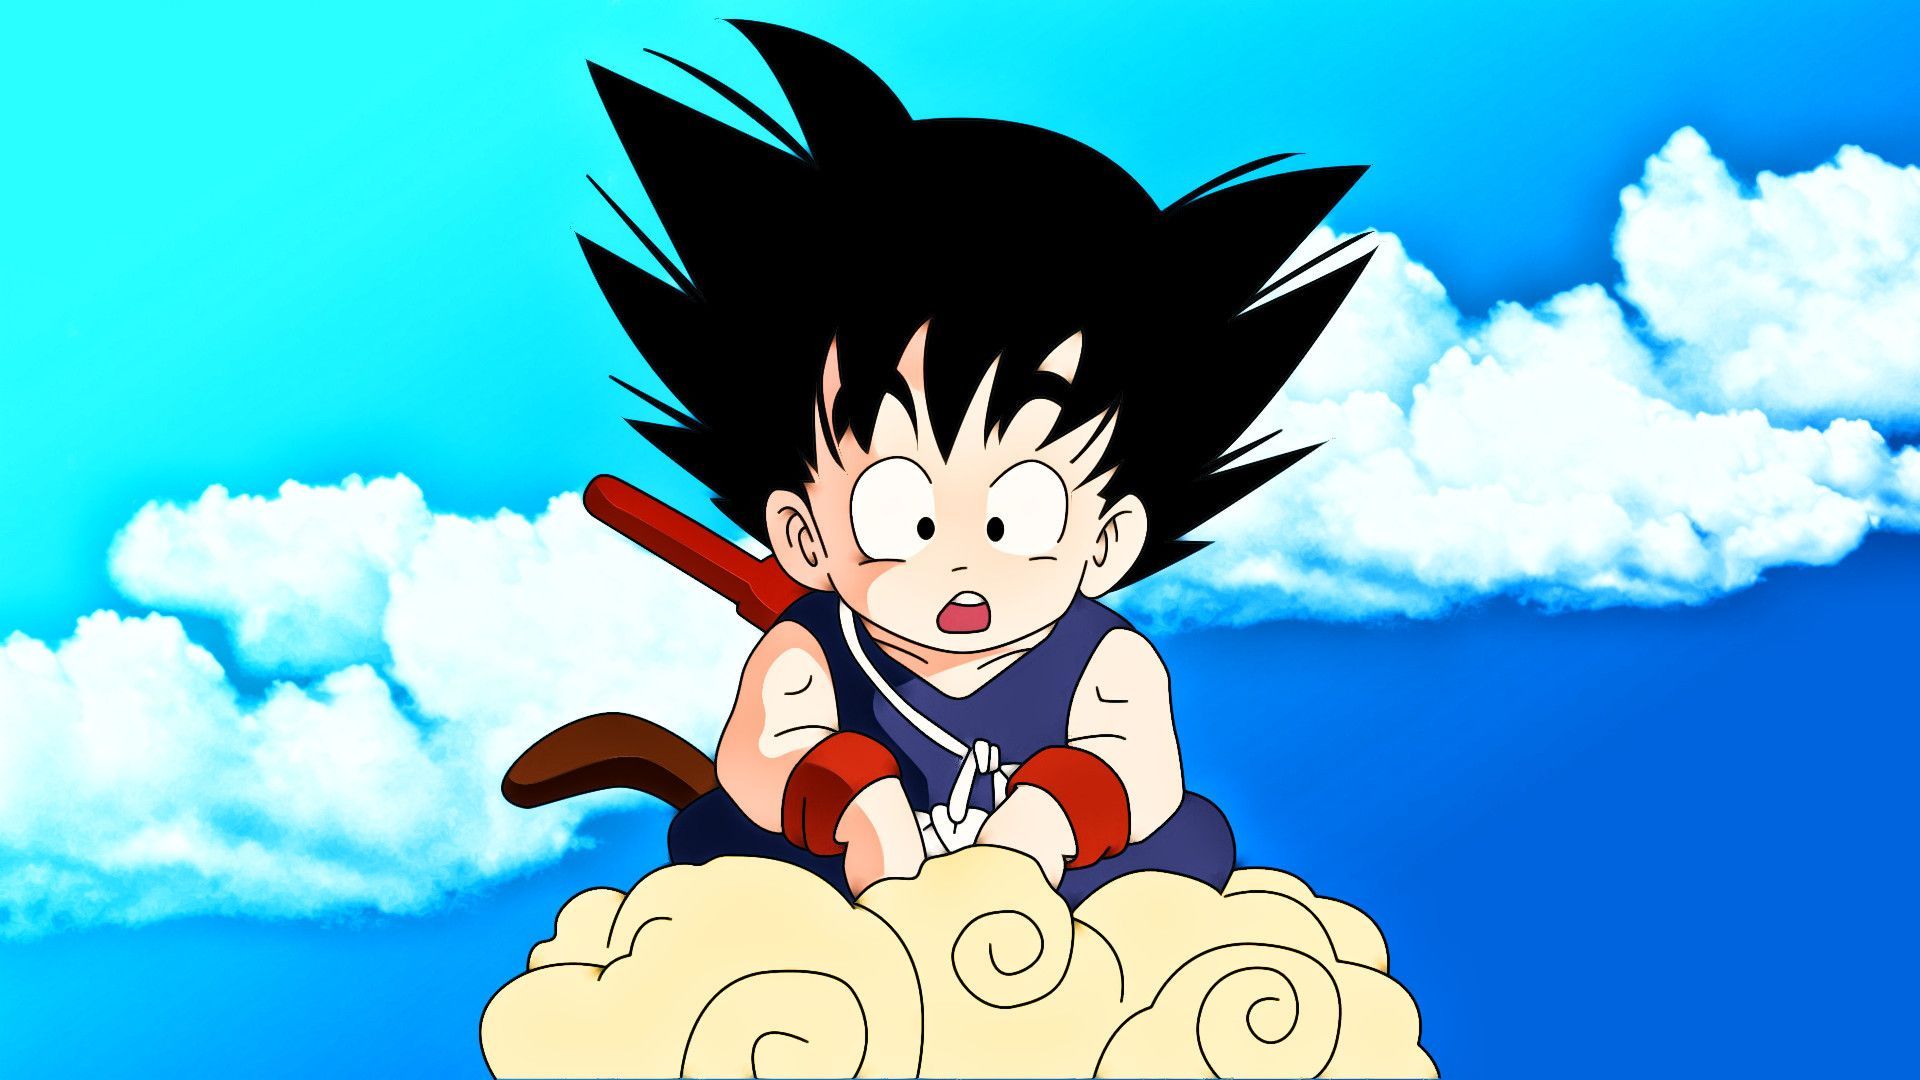 Kid Goku Background Images